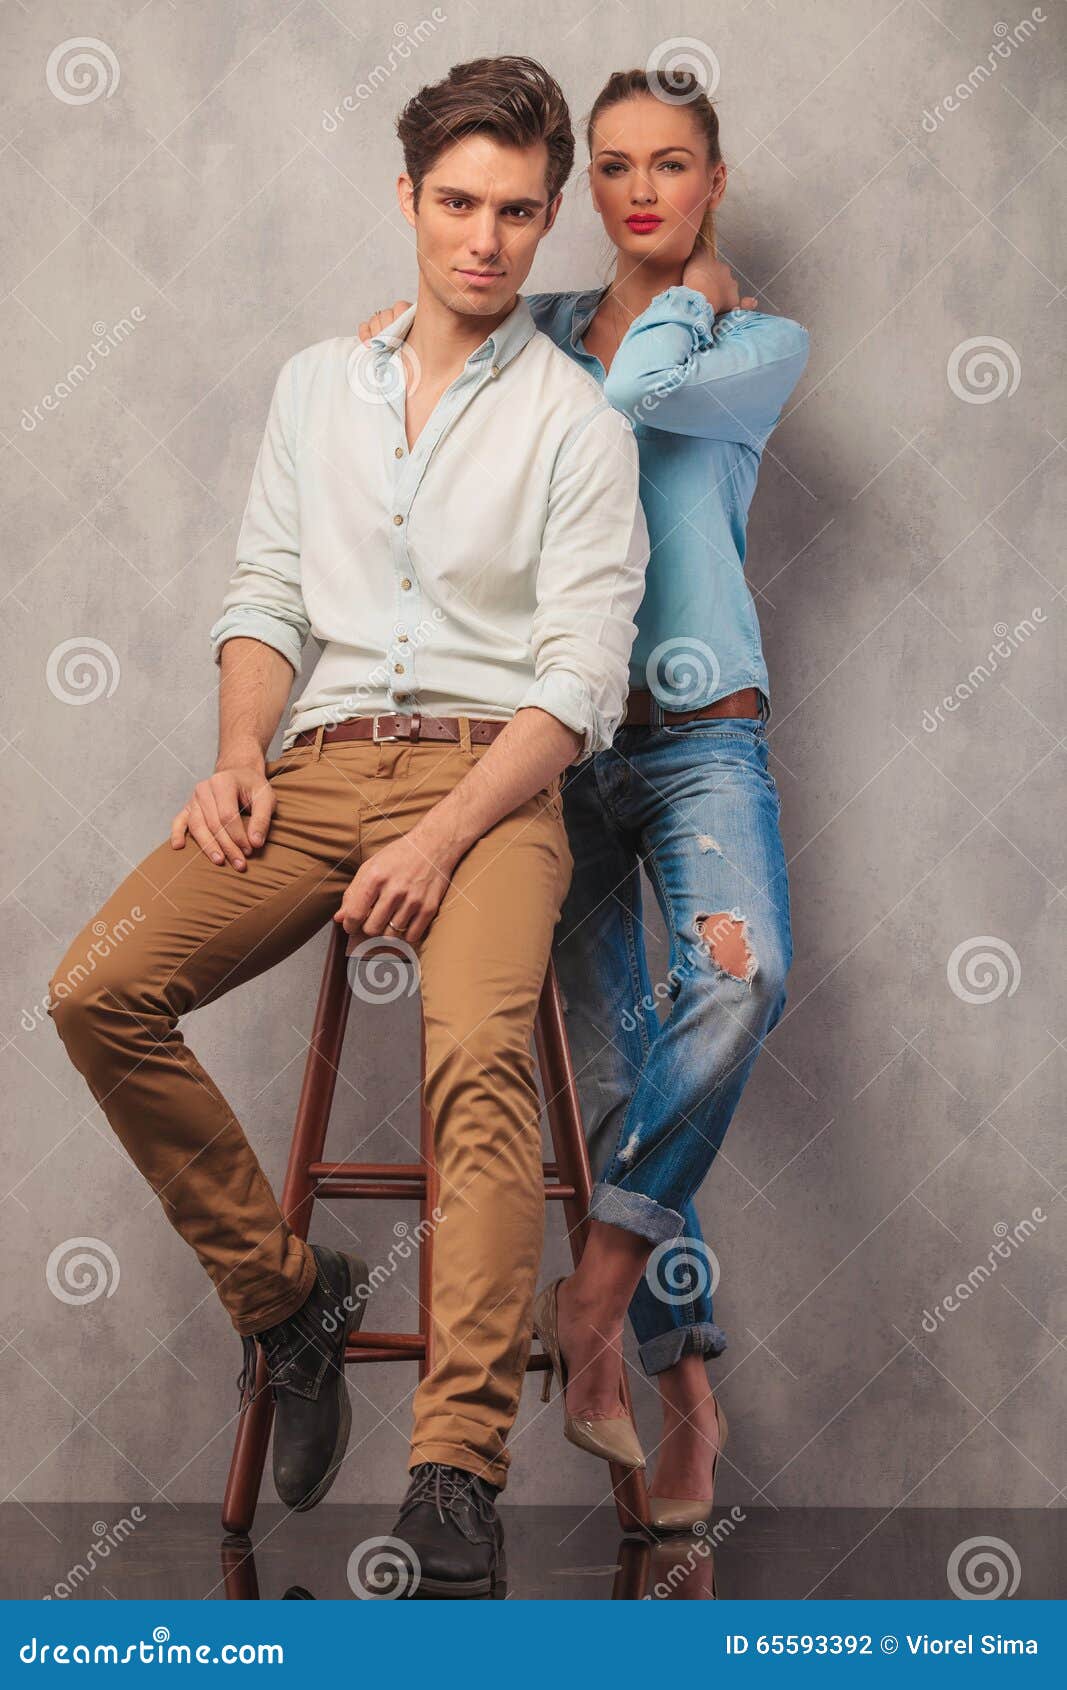 Couple Photoshoot Ideas  Get amazing couple photos in 2 hours